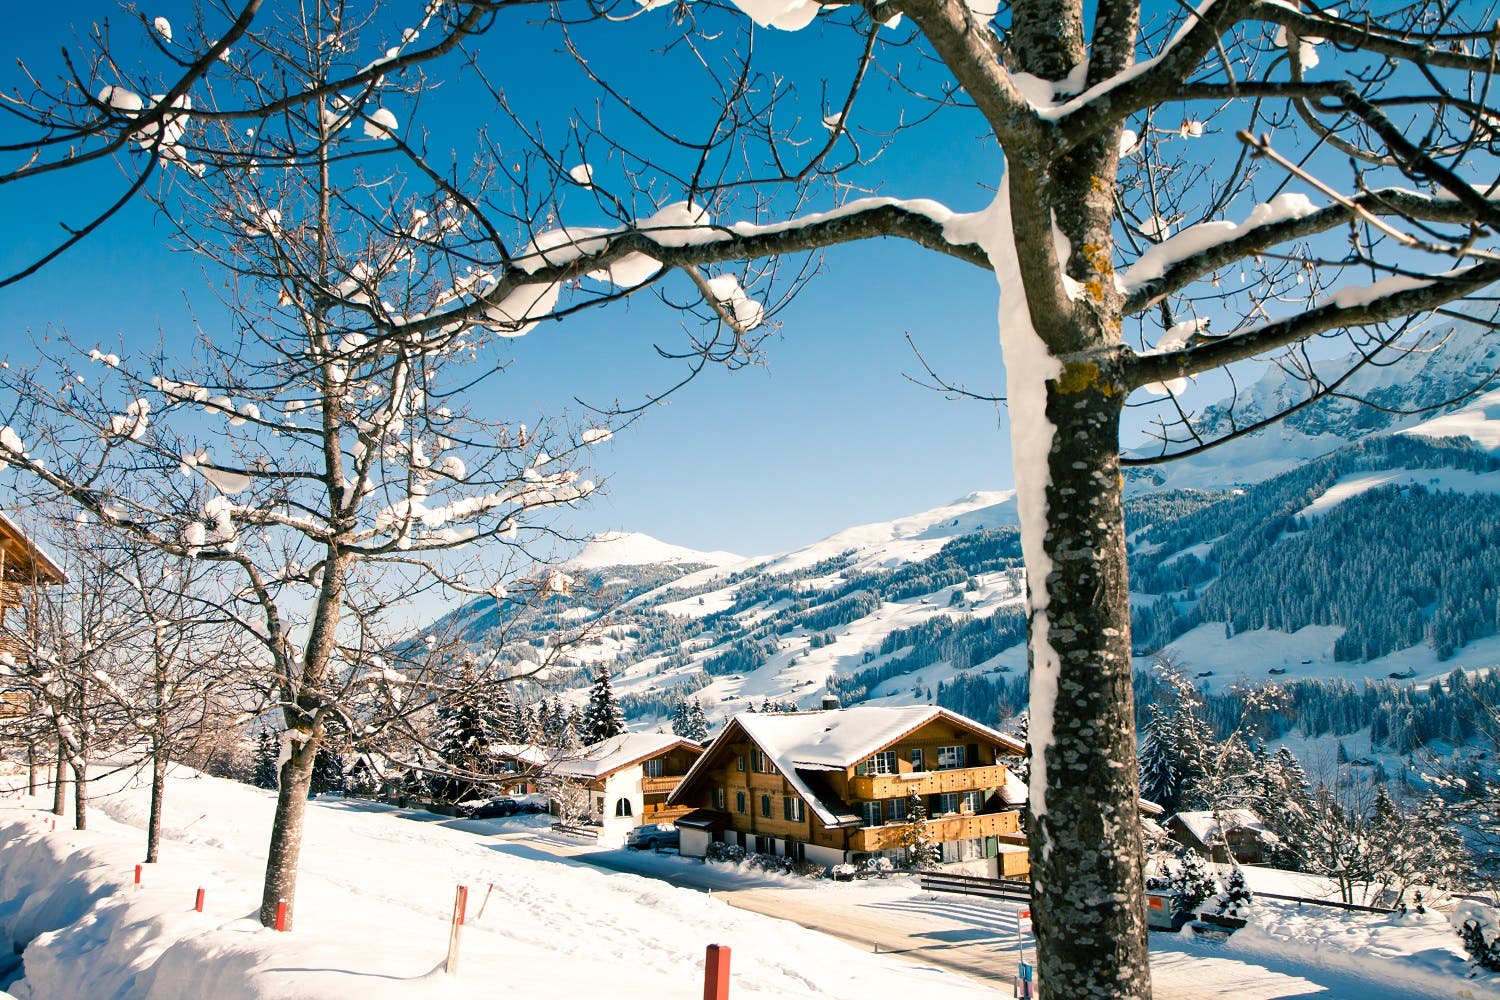 Ski resort snow Shutterstock